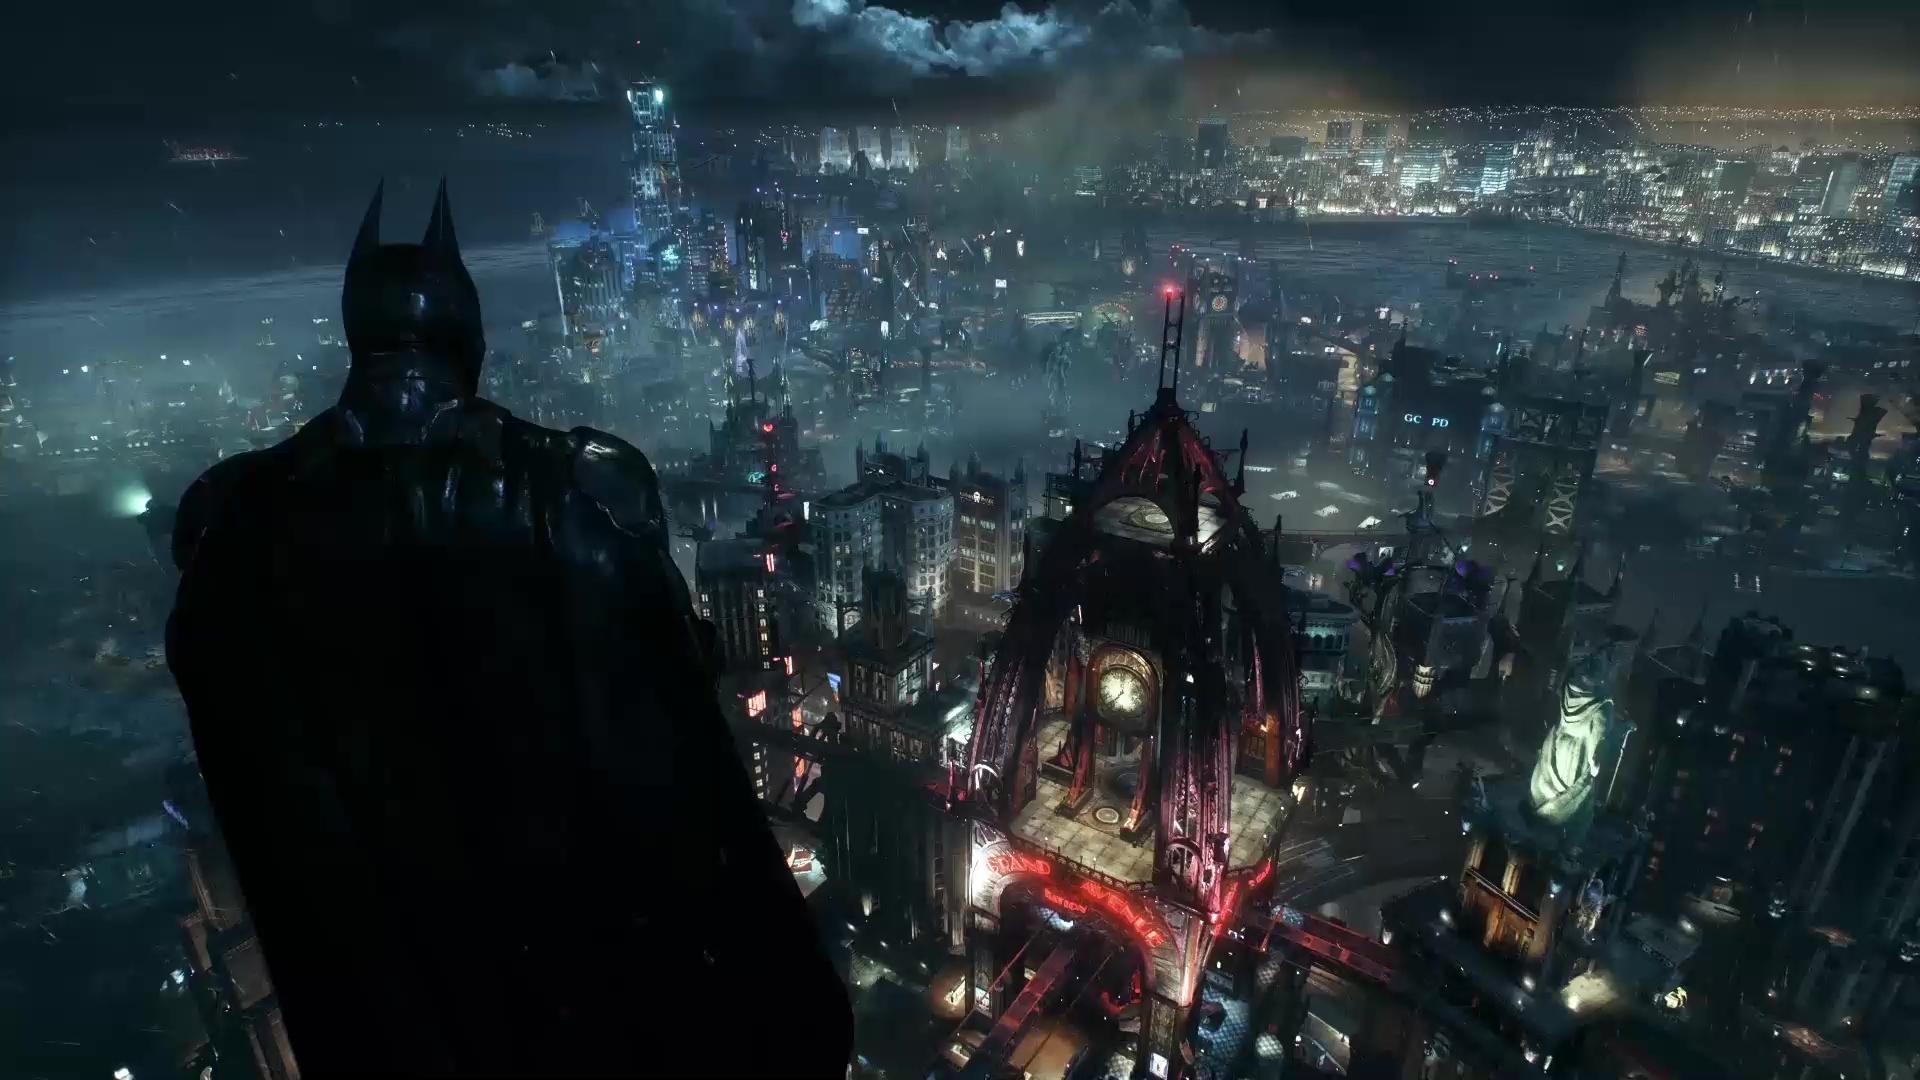 Gotham City movies, Live wallpaper, Dynamic cityscape, Batman's domain, 1920x1080 Full HD Desktop